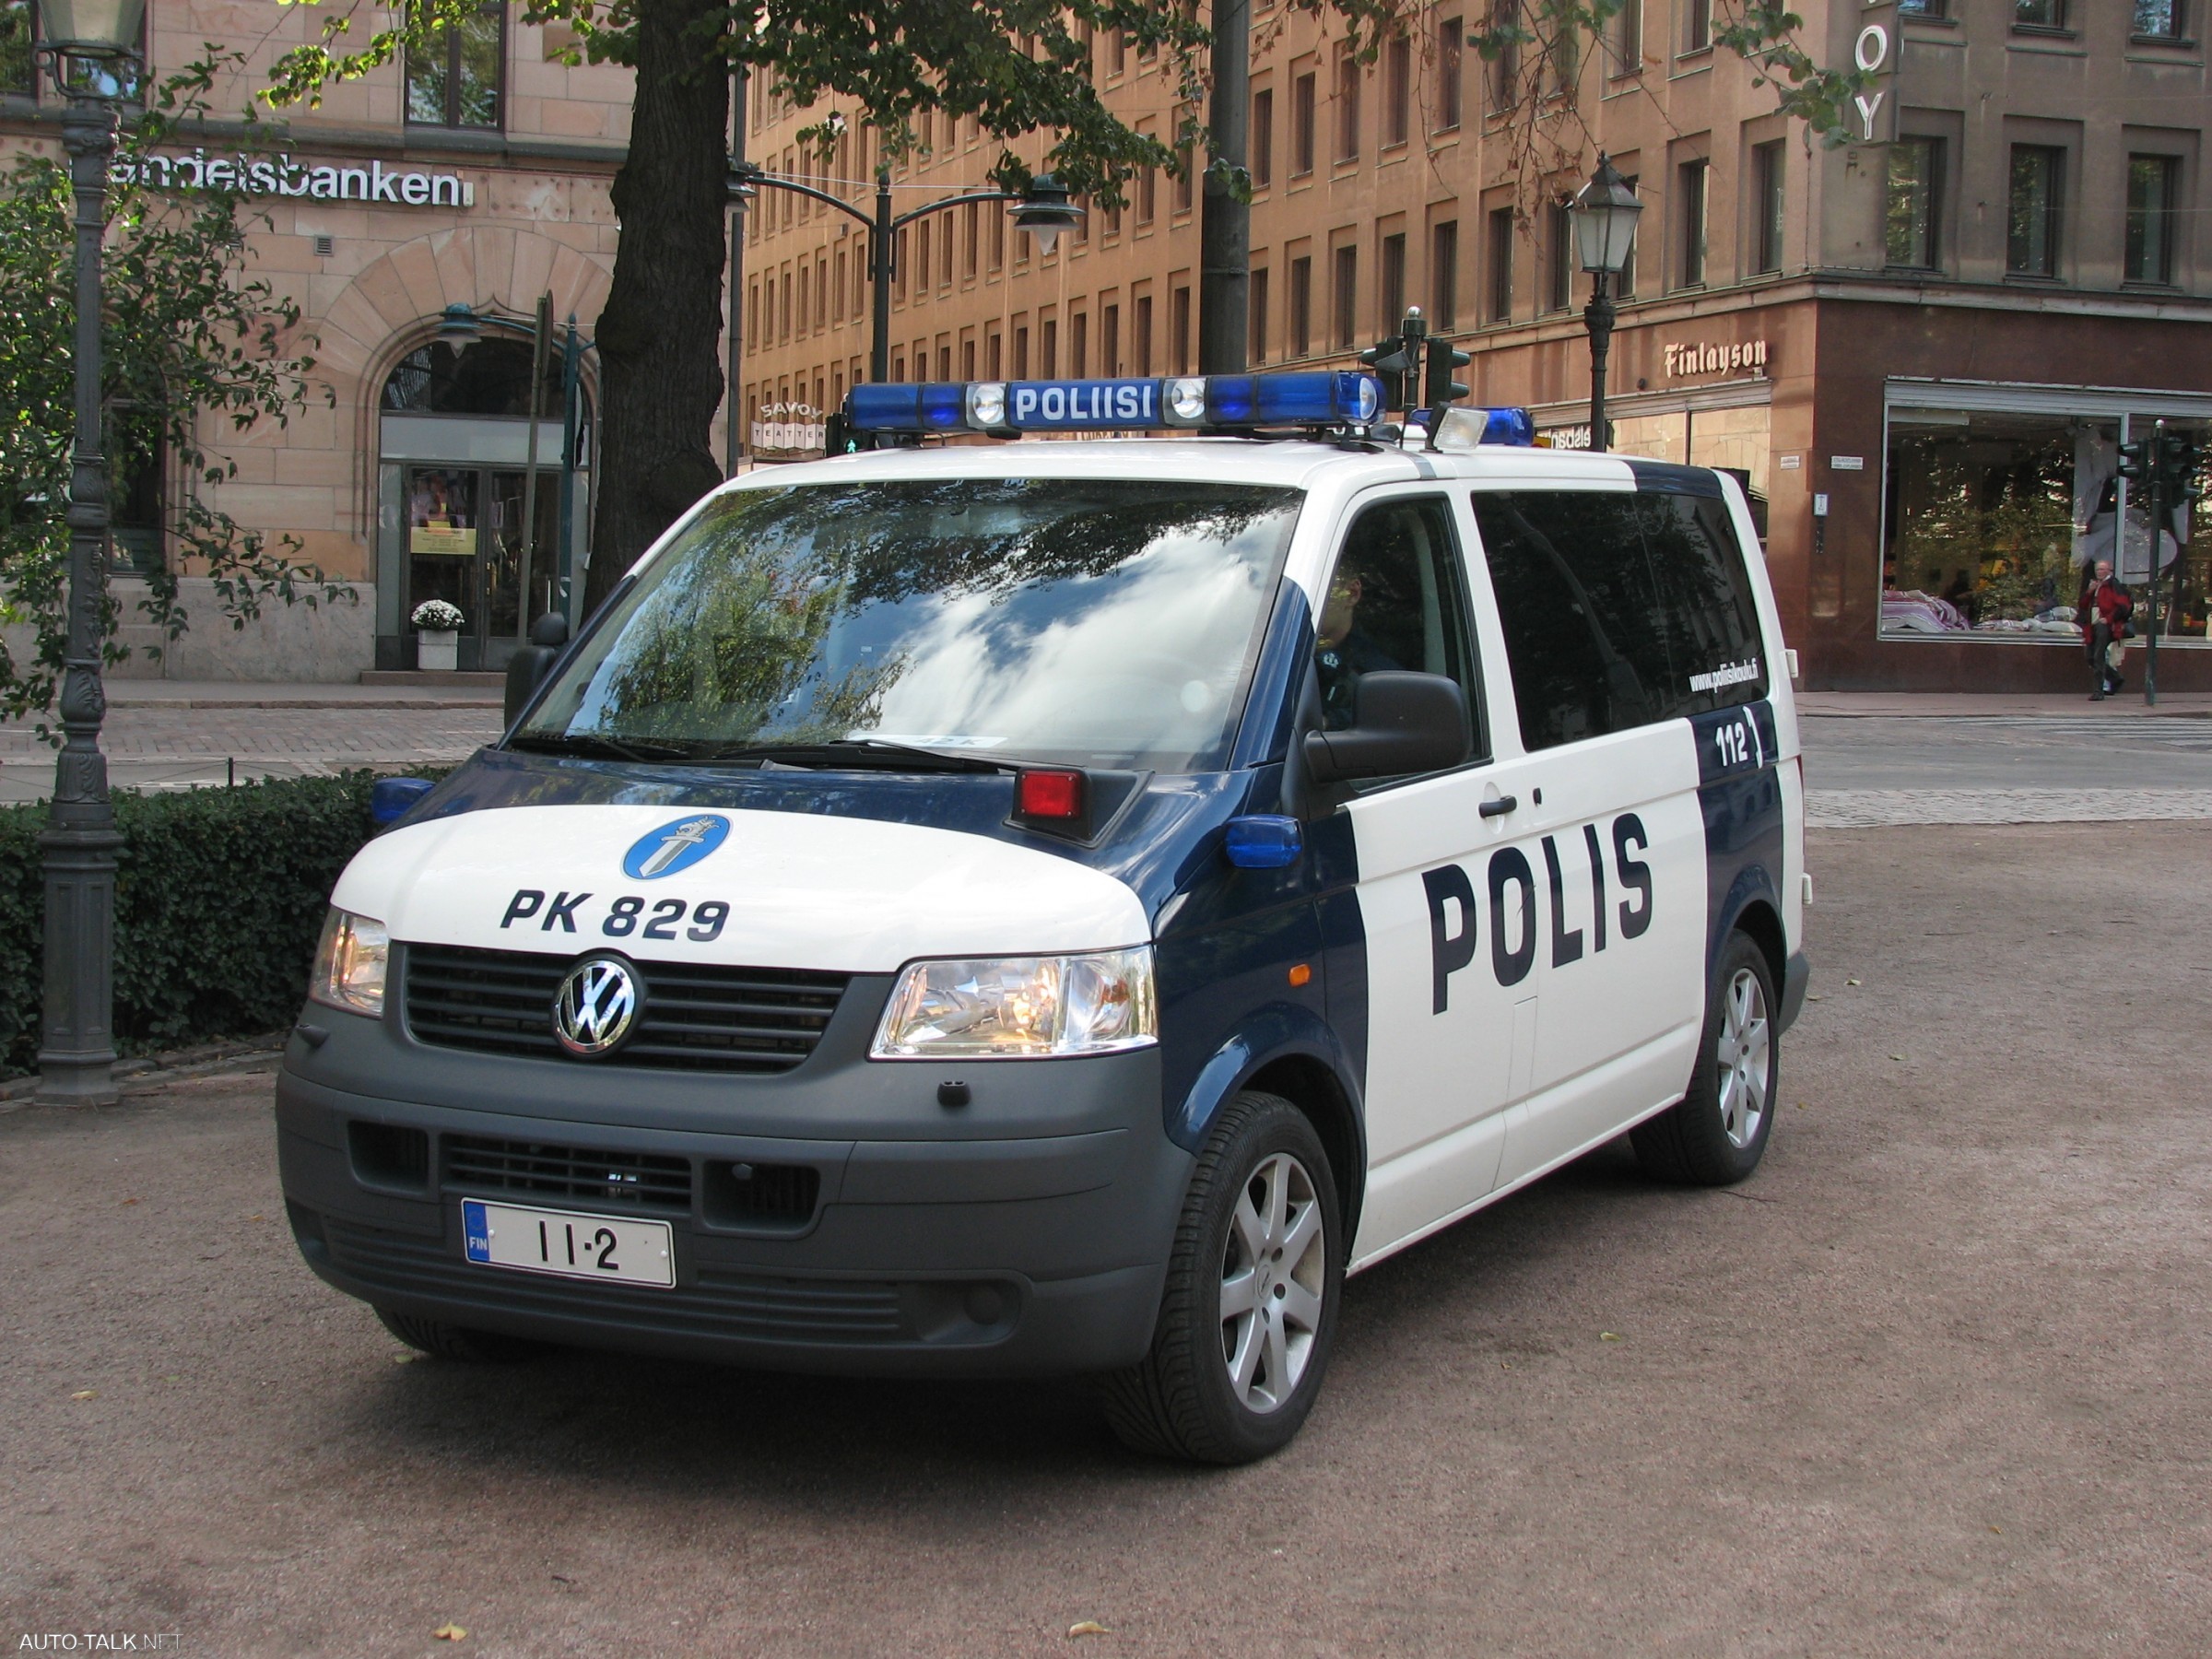 Helsinki Police